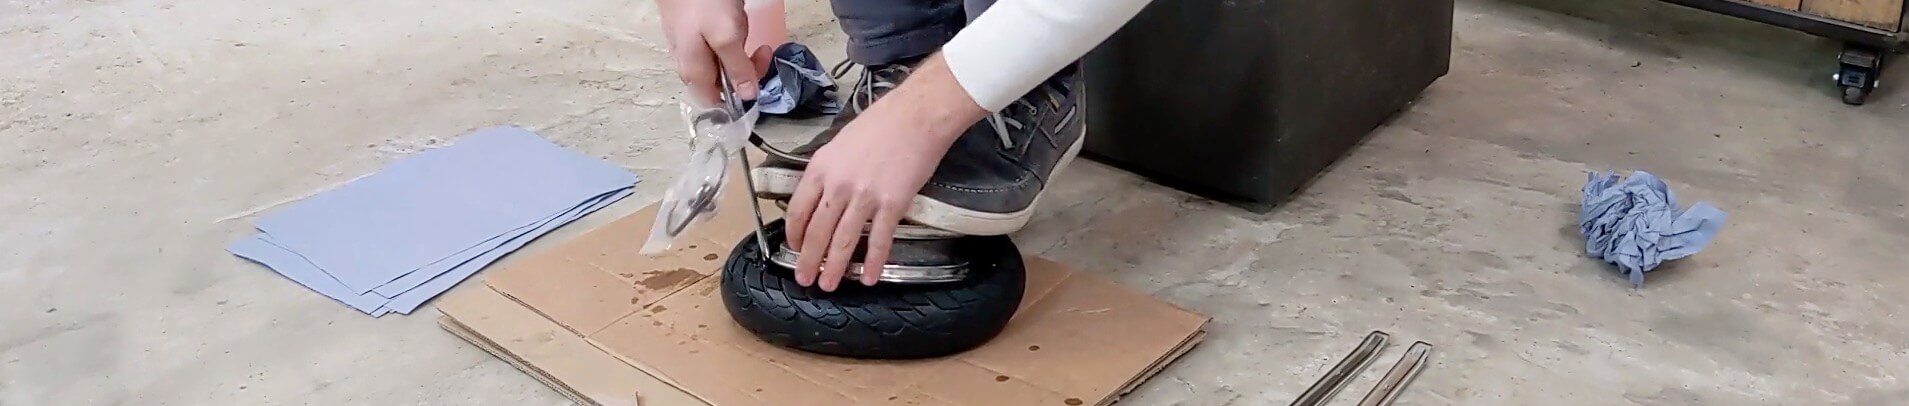 Installation du pneu increvable